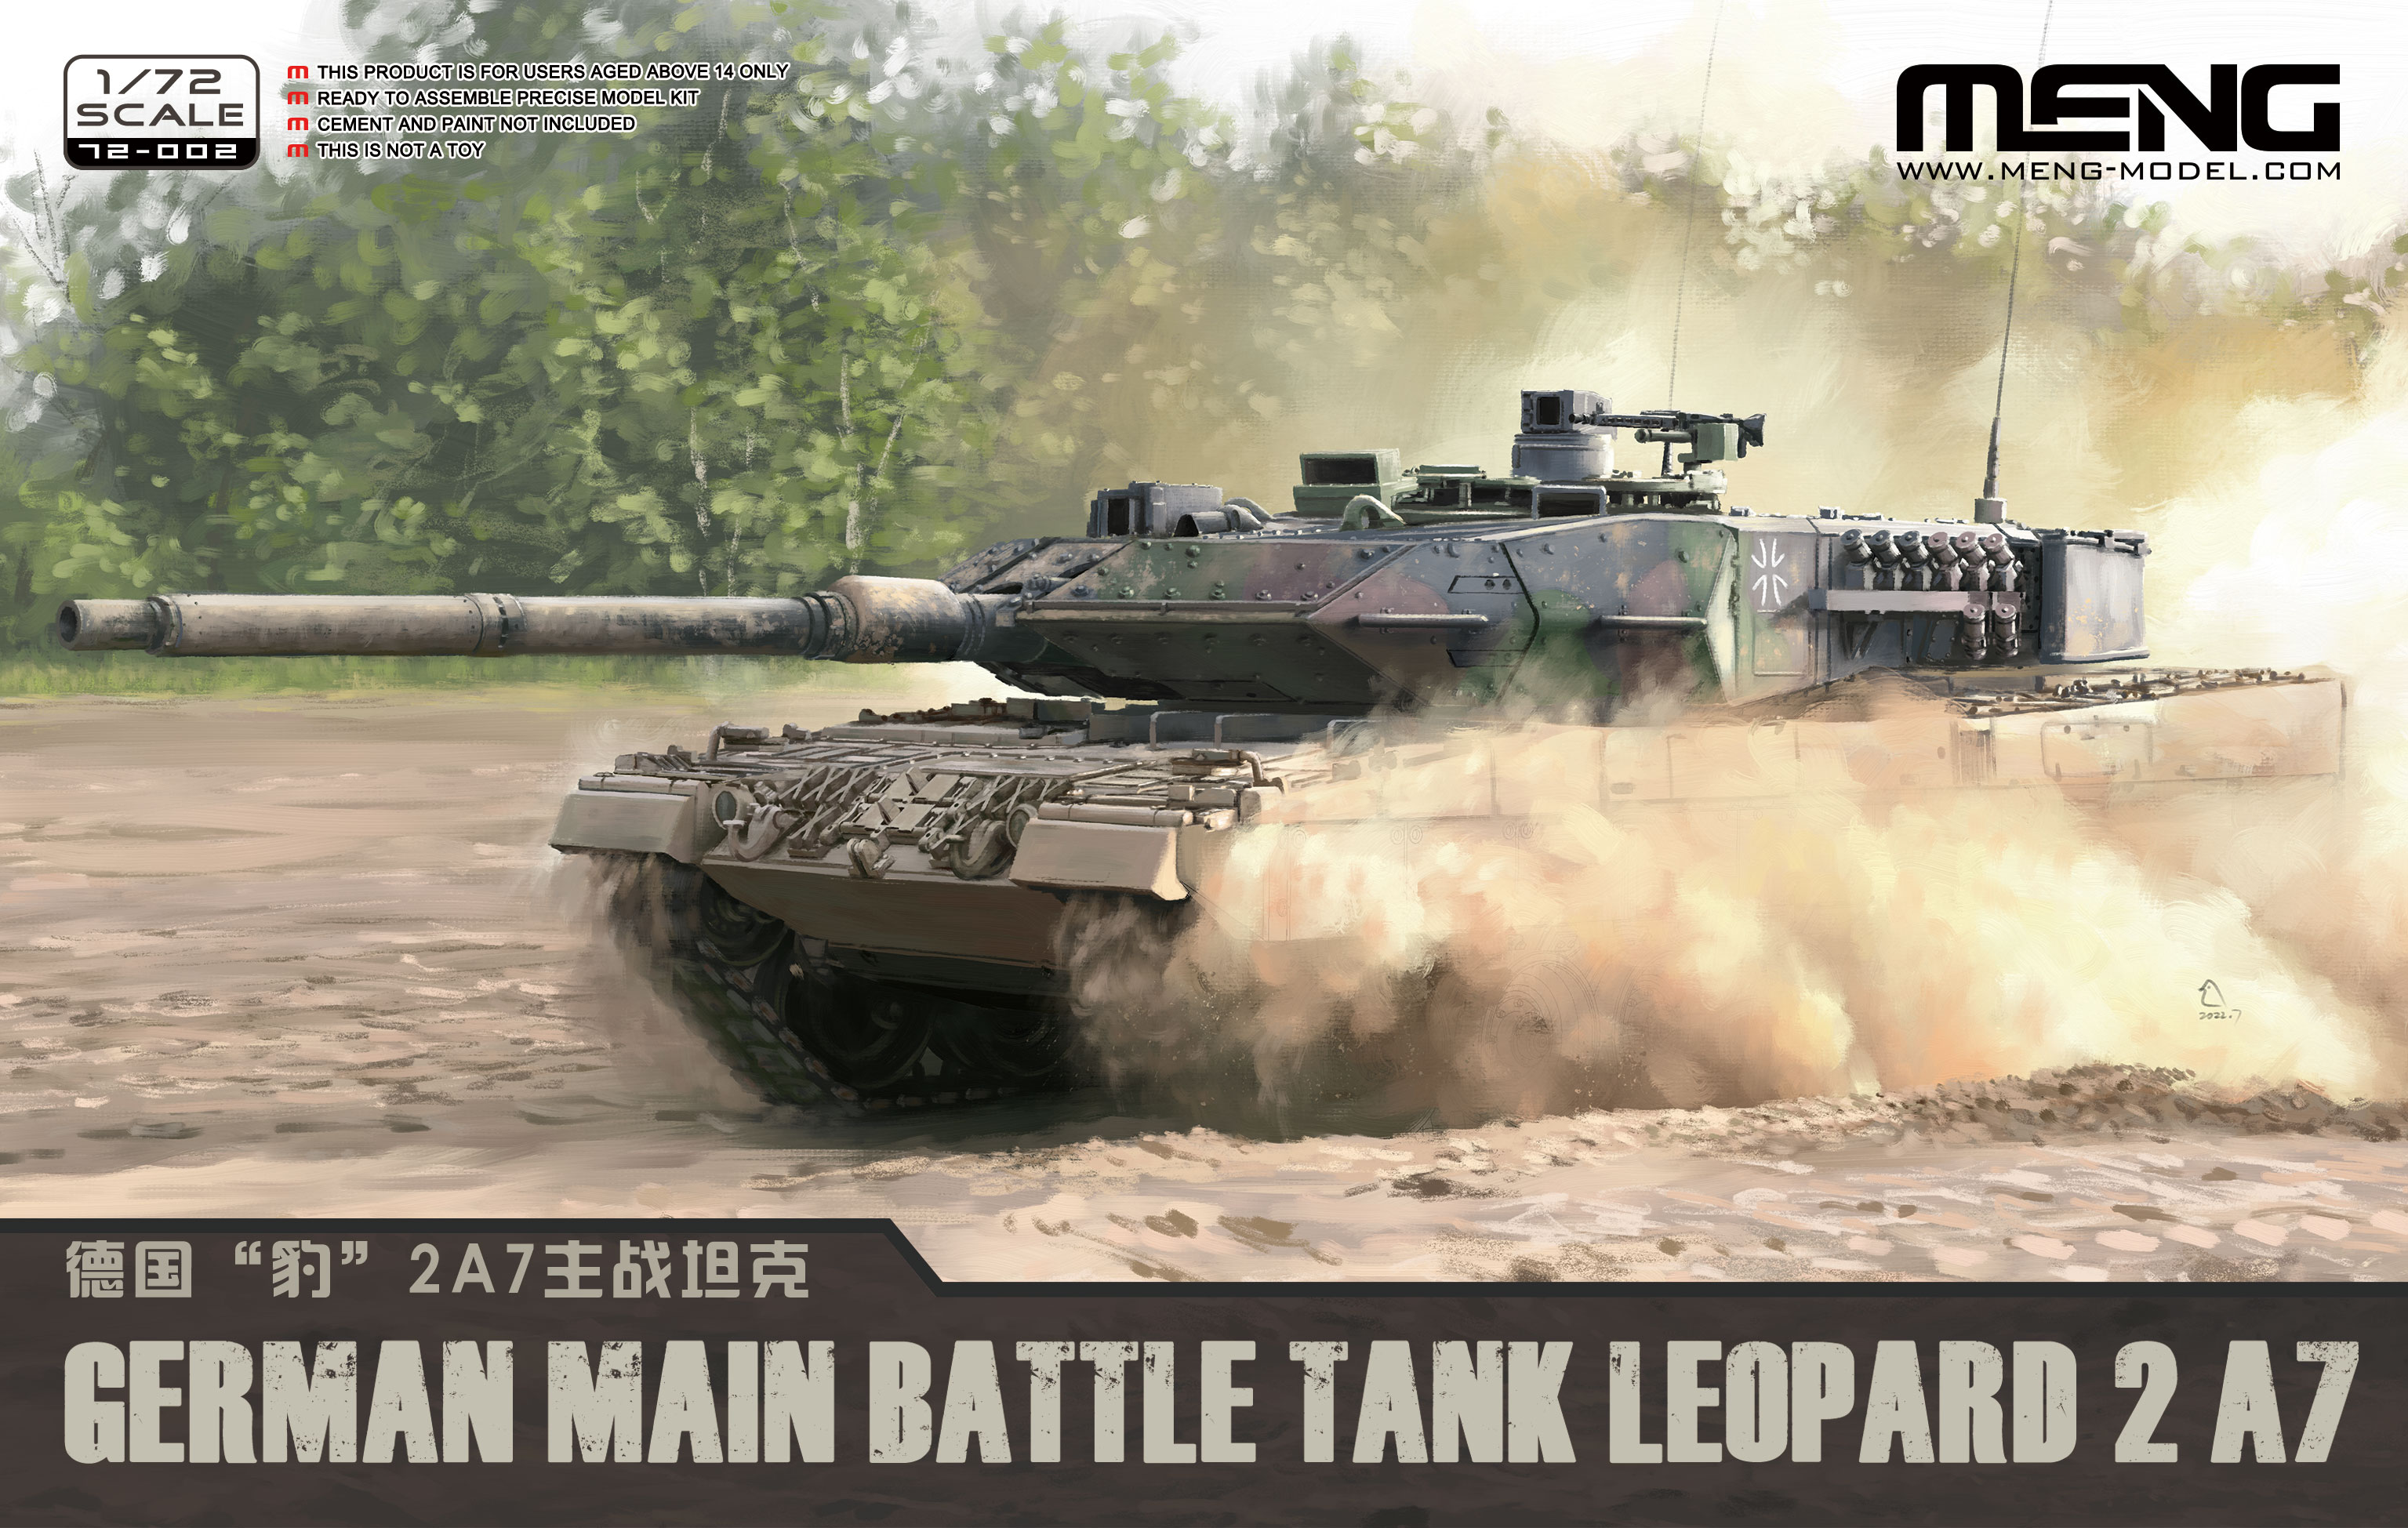 72-002  техника и вооружение  German Main Battle Tank Leopard 2 A7  (1:72)